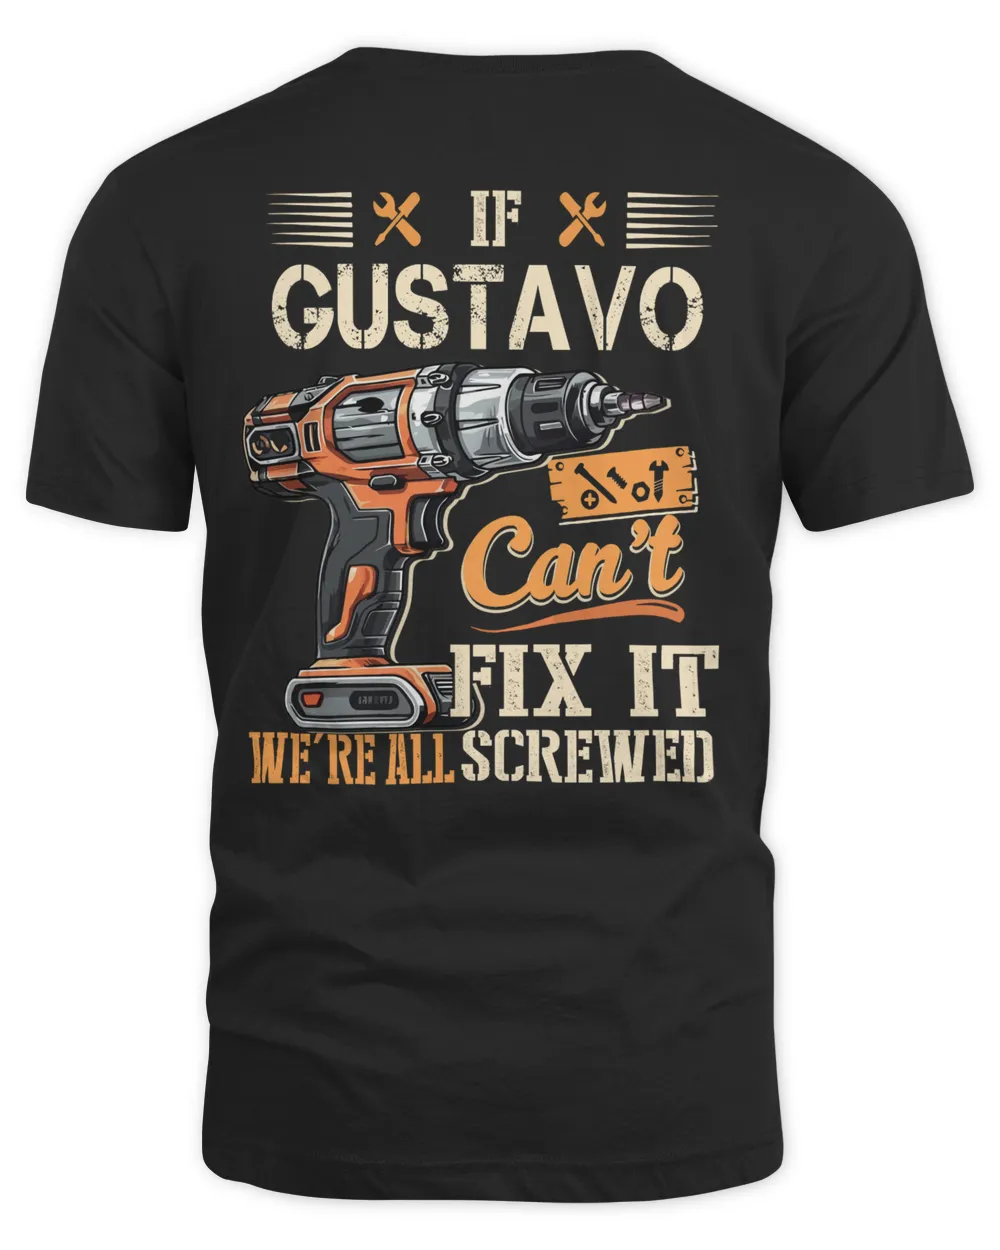 Gustavo We All Screwed